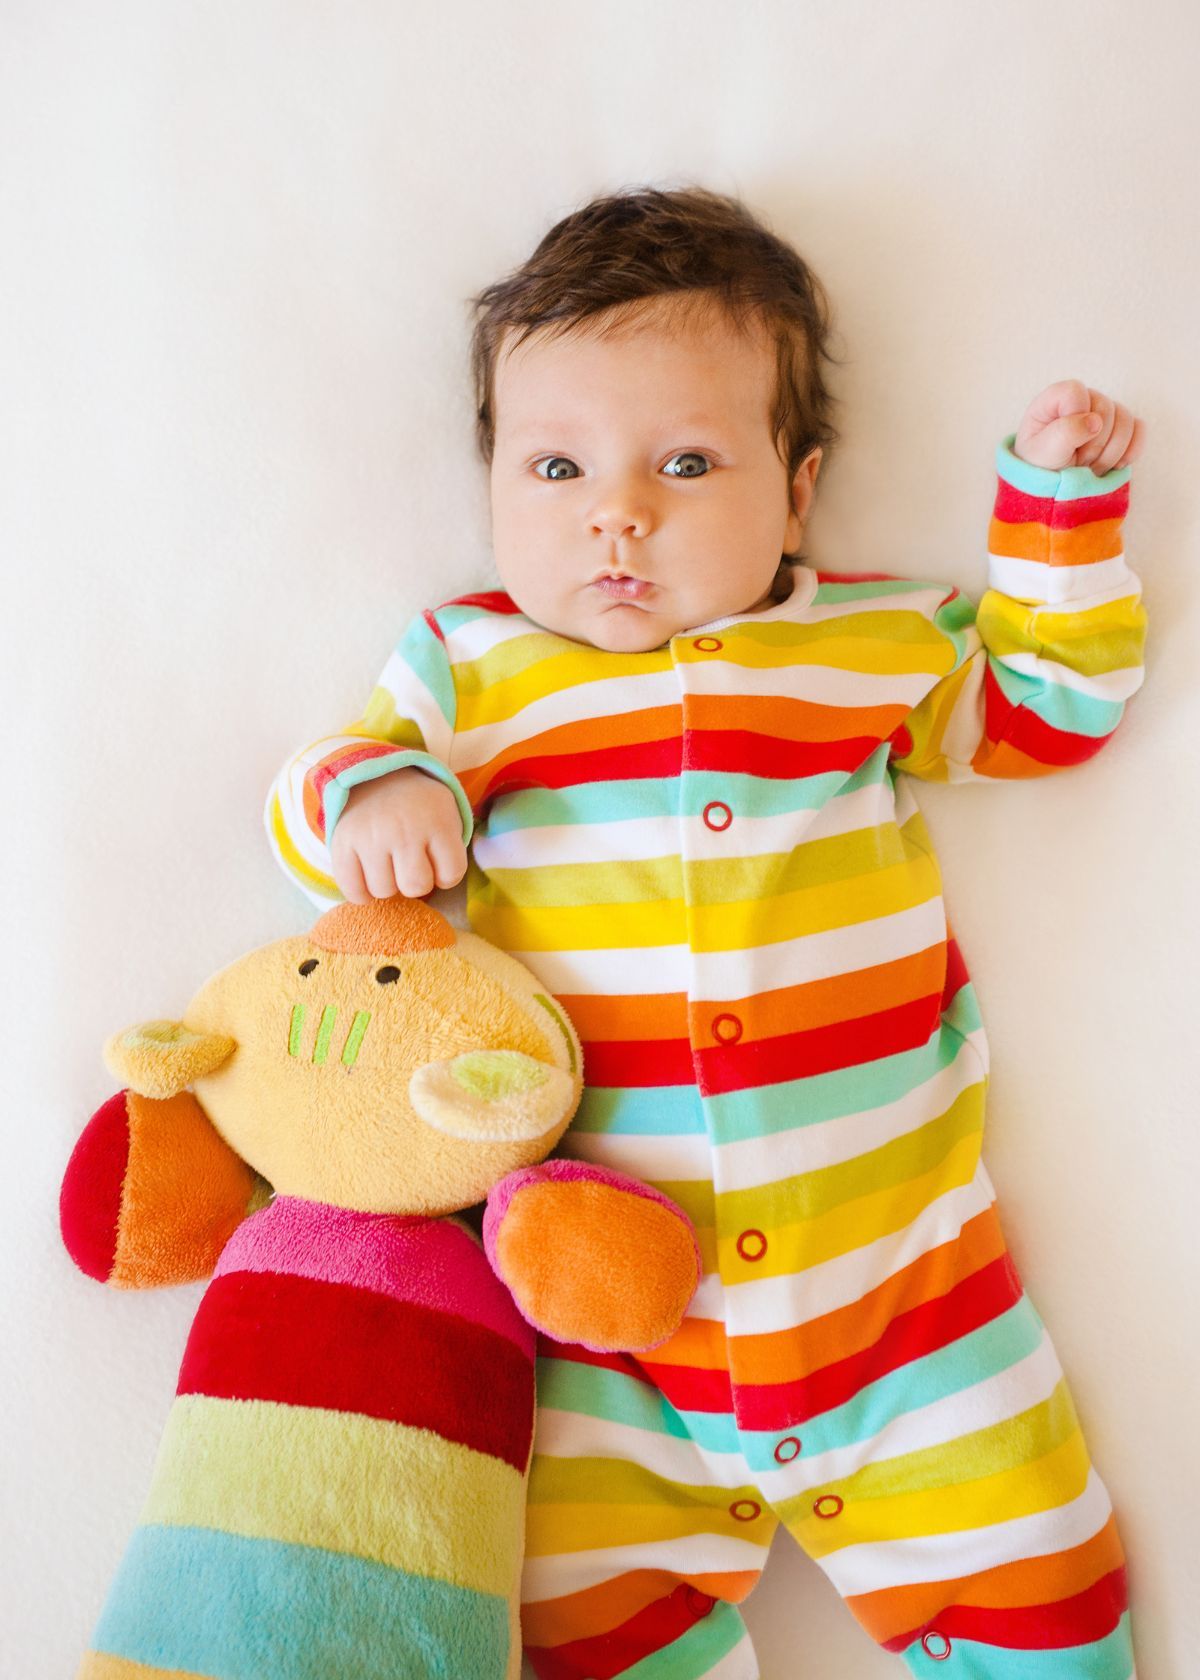 Toy Story Pajamas: Bringing the Magic of Pixar to Your Child's Sleepwear